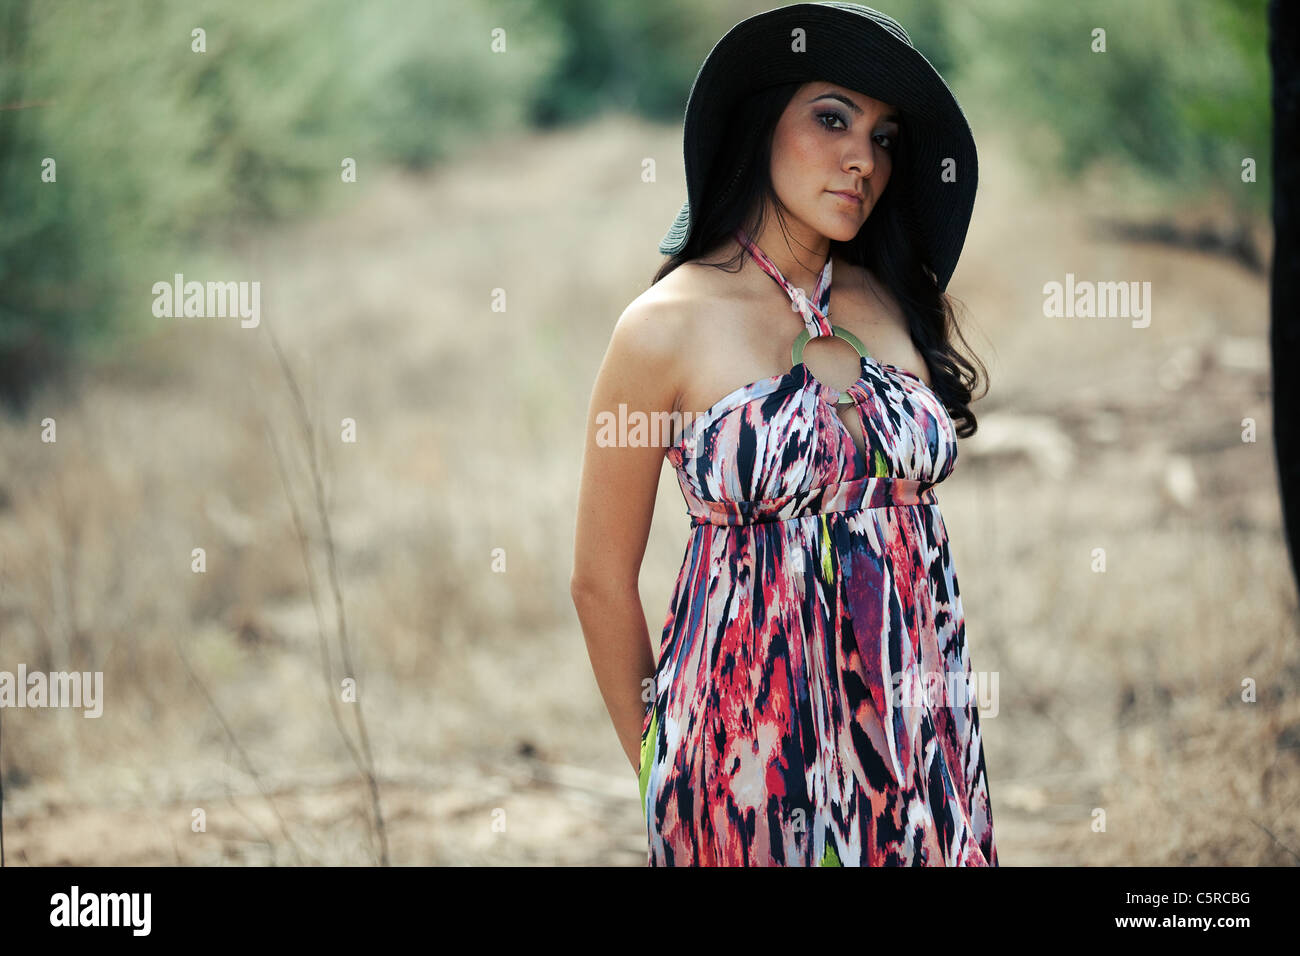 Serious young Hispanic woman wearing black hat outdoors Stock Photo